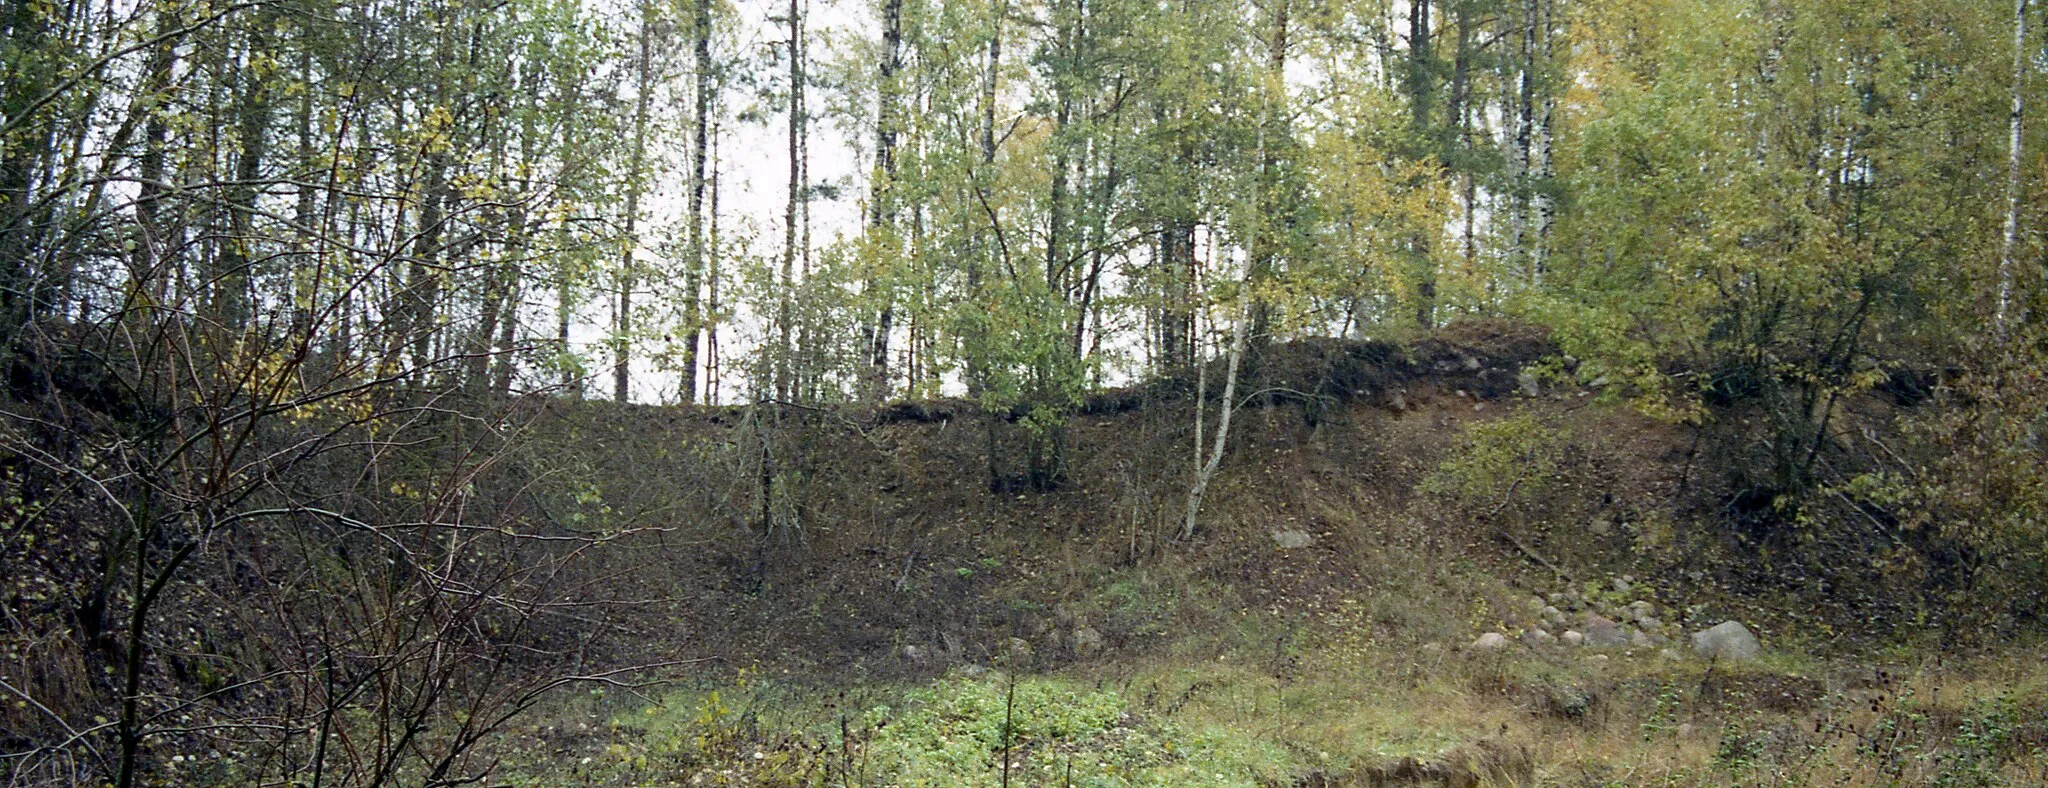 Photo showing: Senkai hillfort, Kretinga district, Lithuania